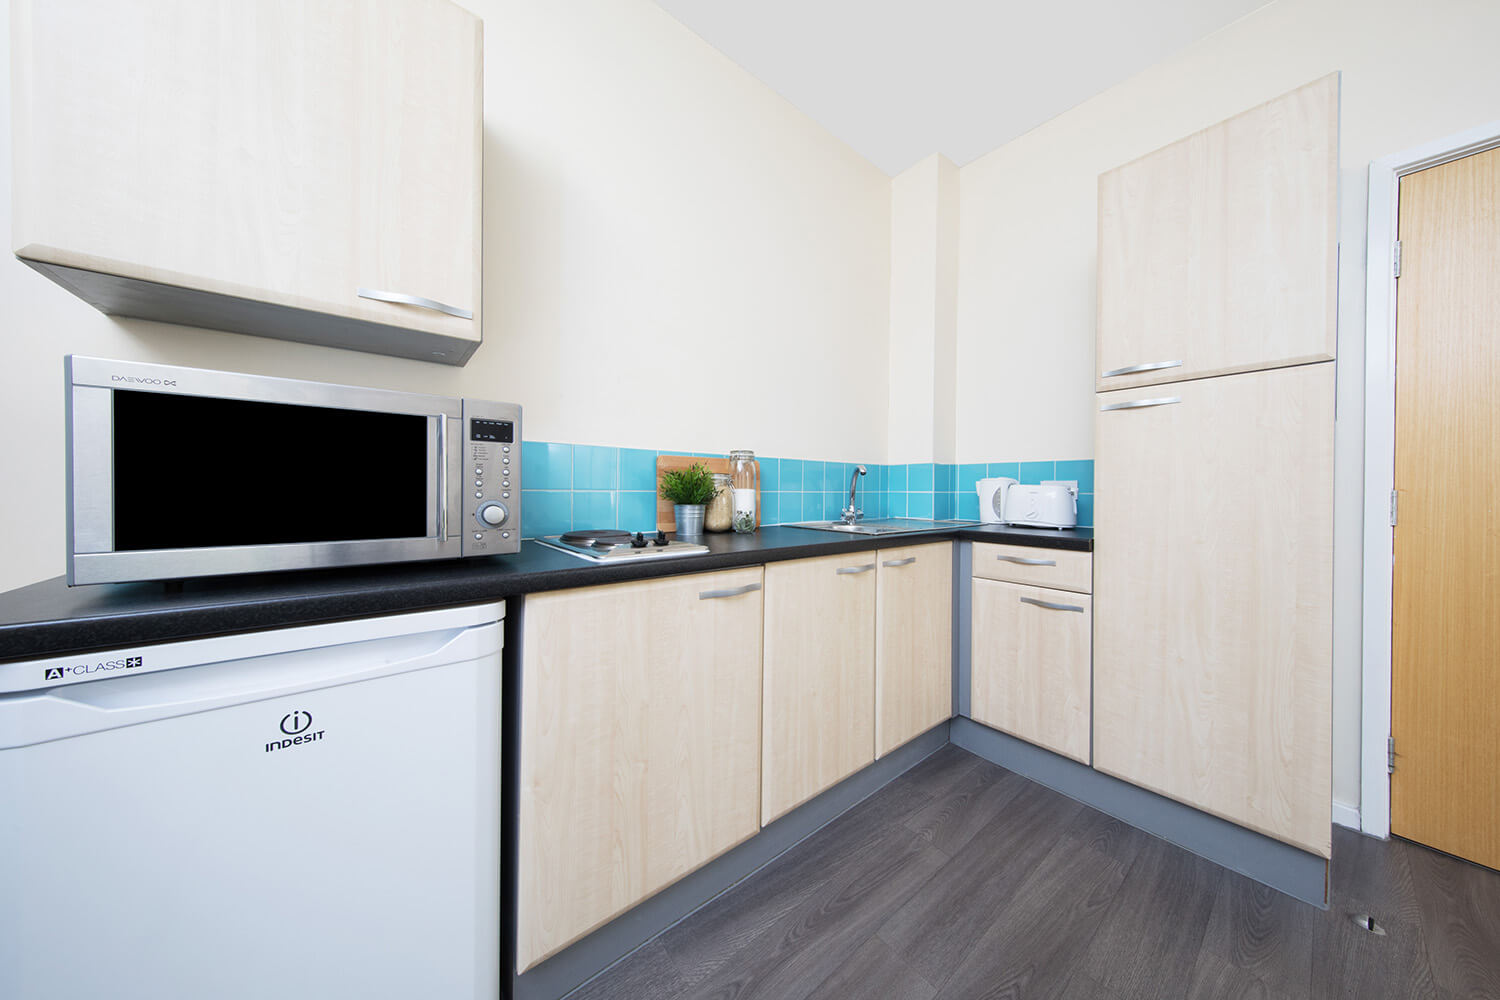 Student accommodation studio kitchen in Liverpool